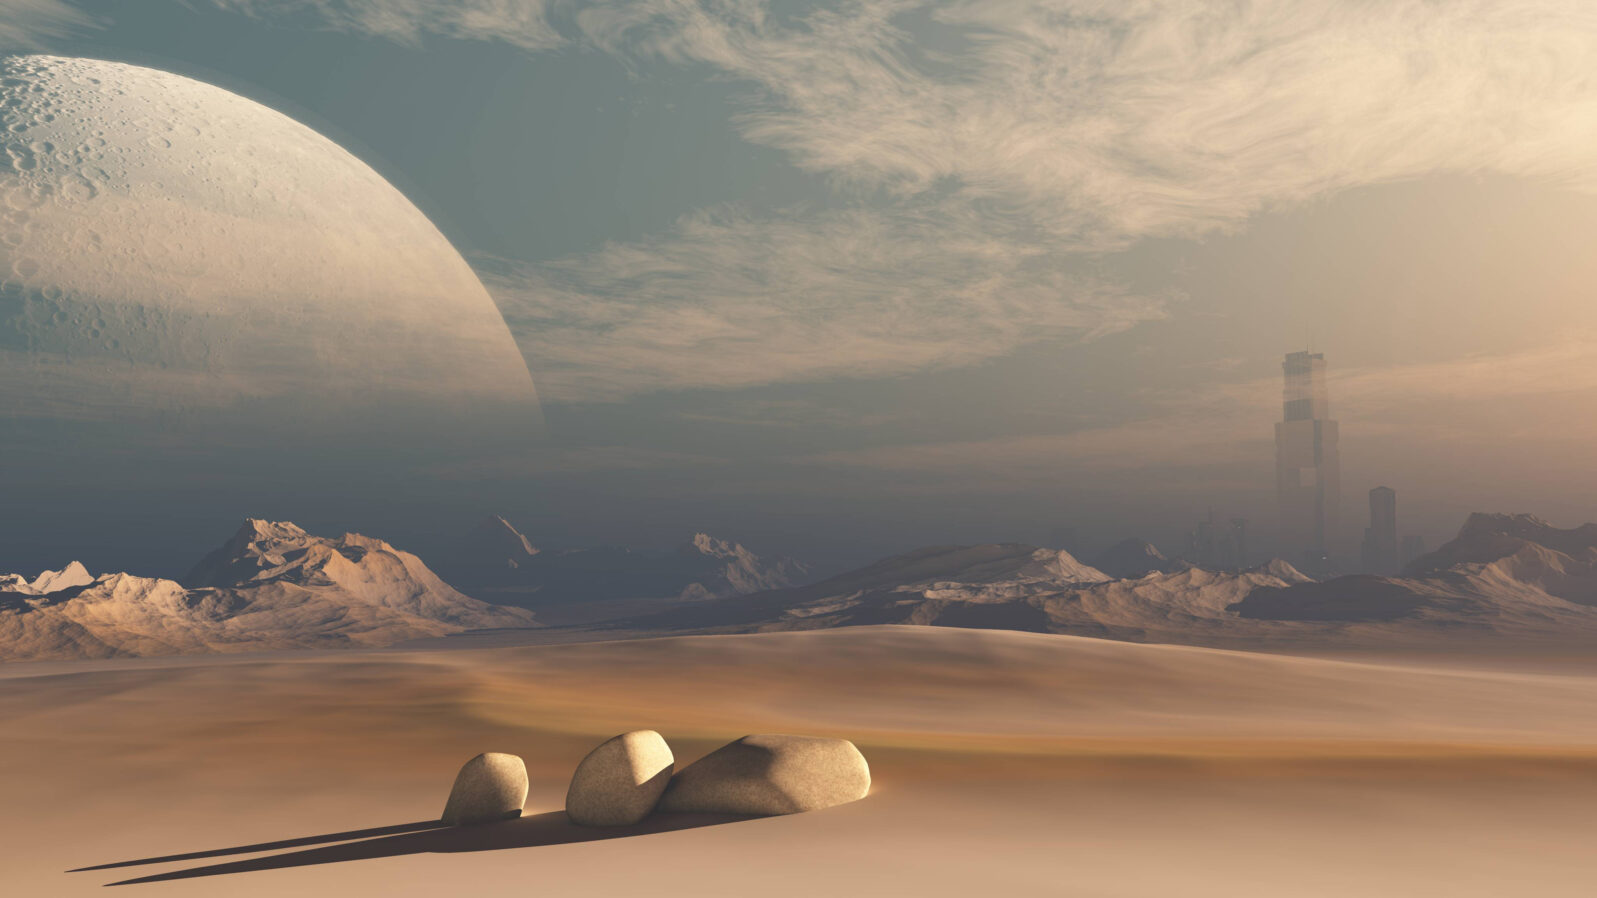 Futuristic Mars Space Scene with Large Moon